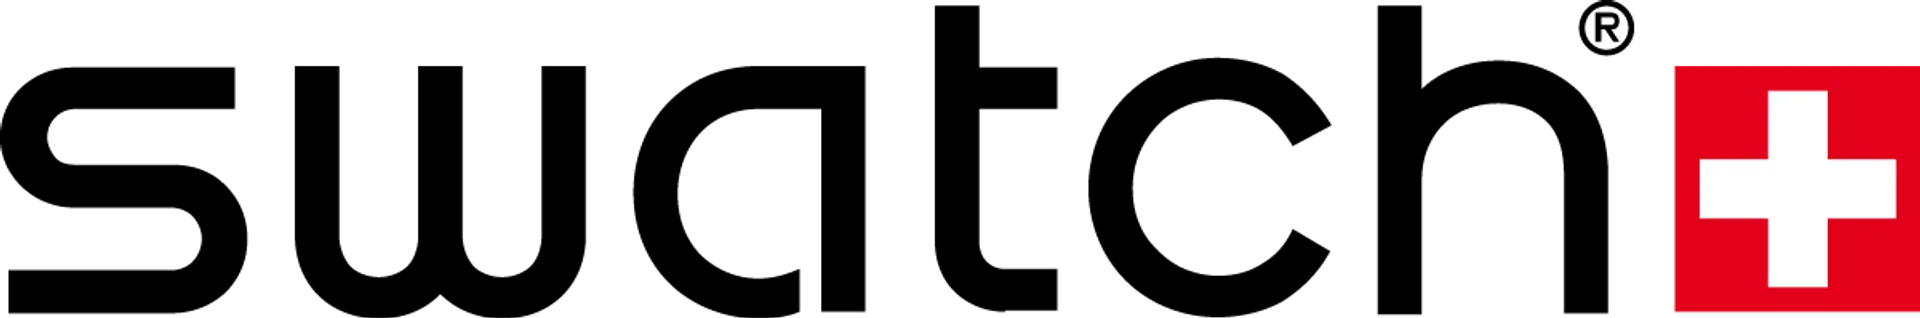 SWATCH logo